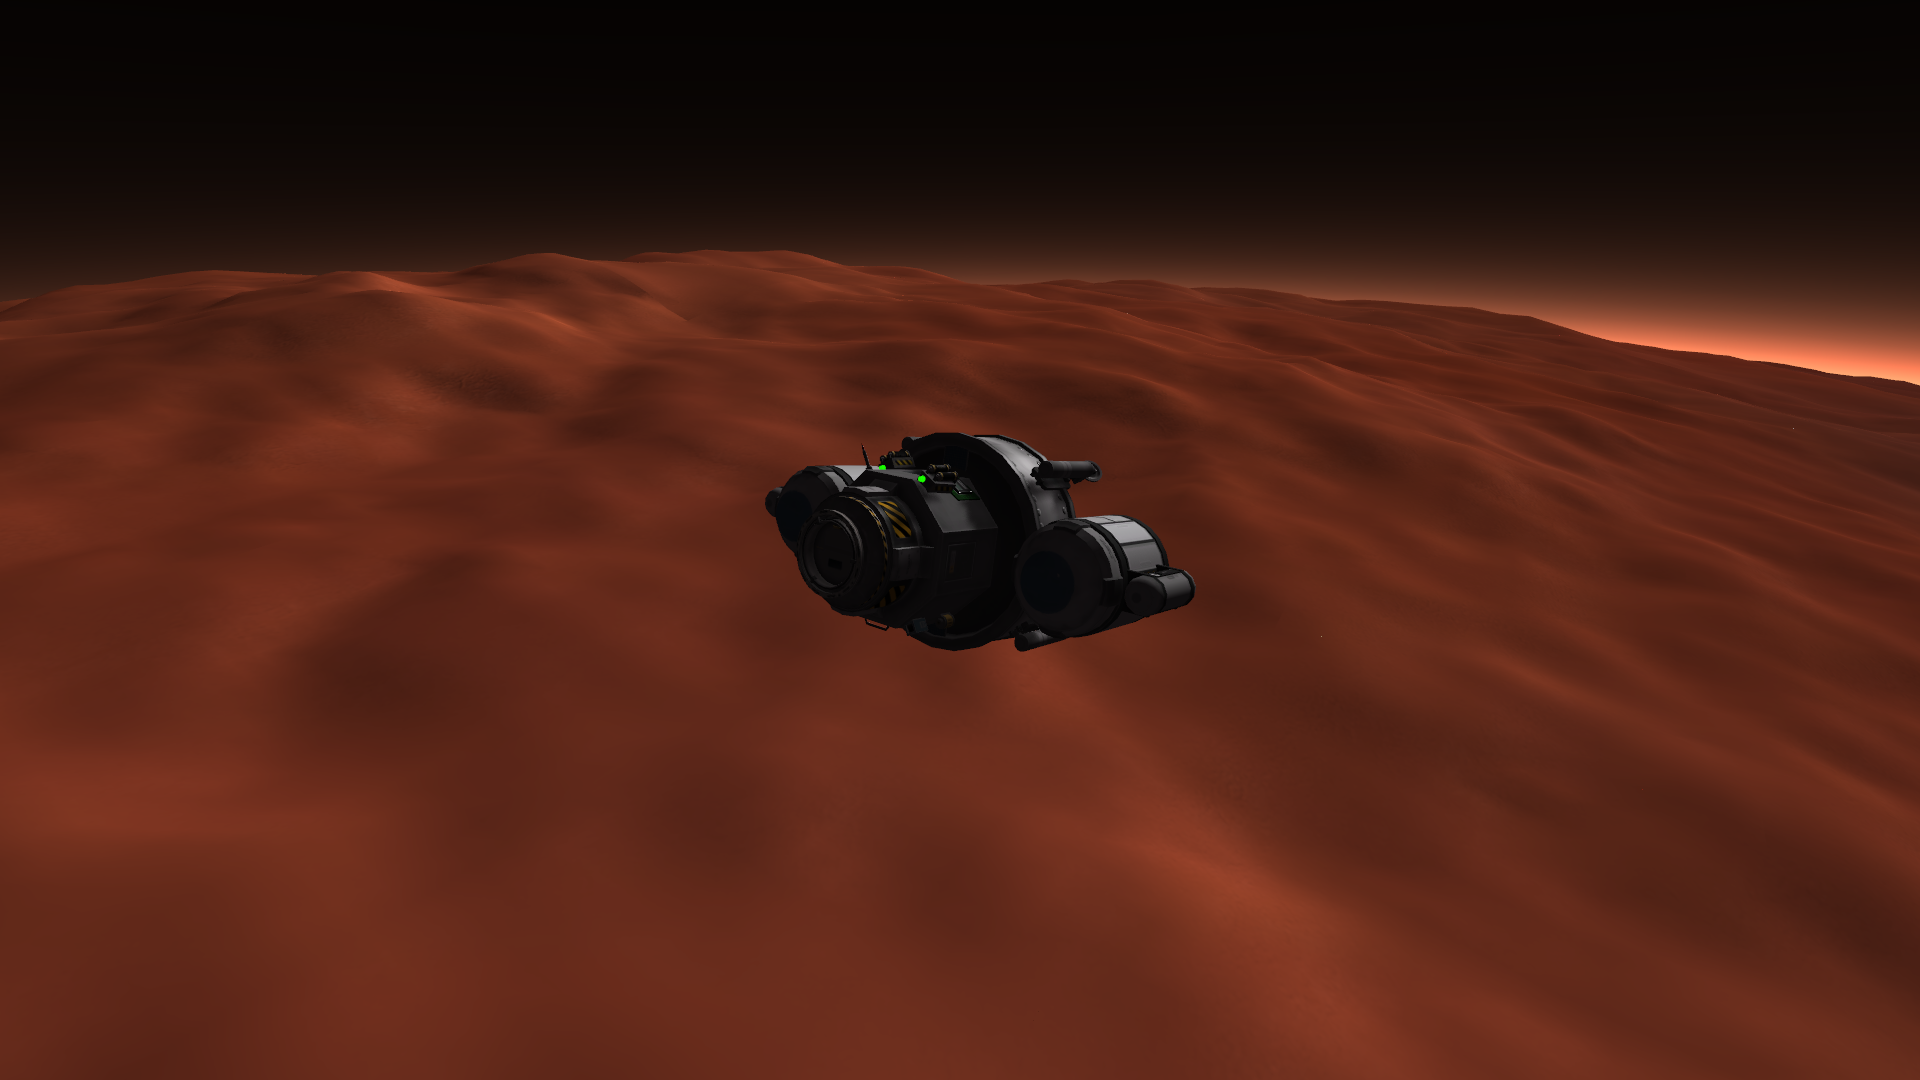 ambition duna lander going in